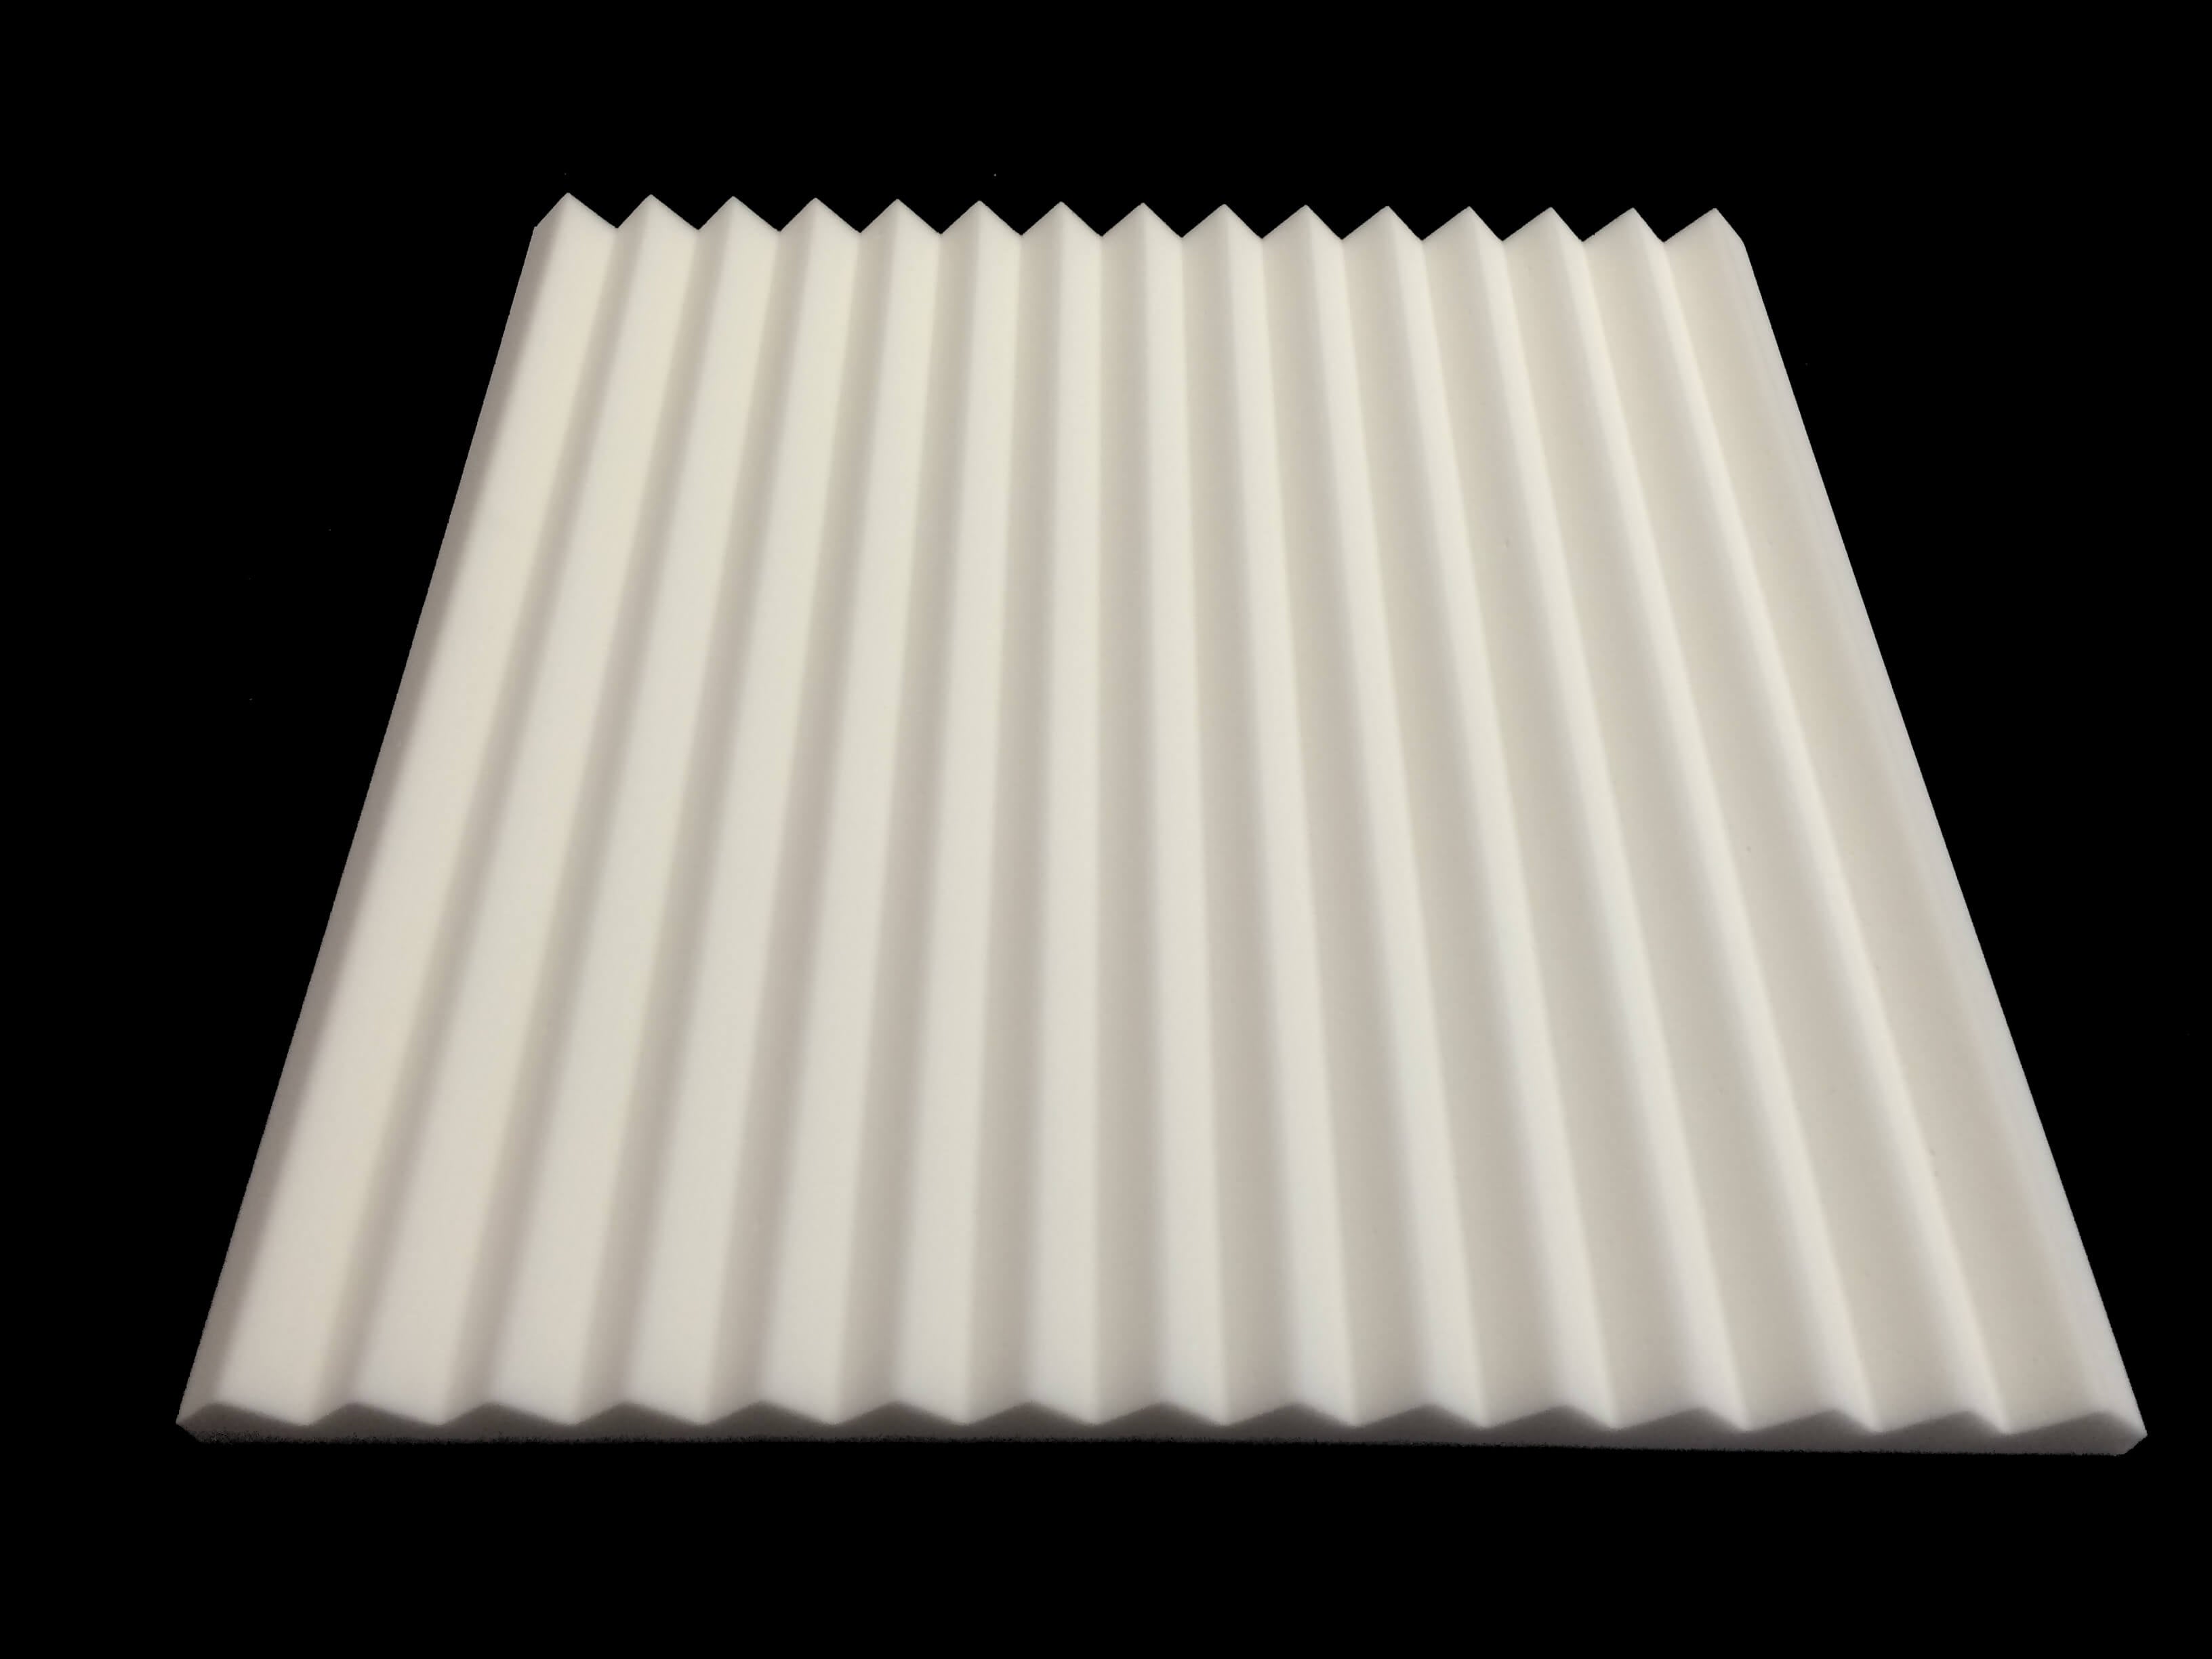 Mel-Acoustic Wedge 40mm White Melamine Acoustic Foam Panel 600x600 Pack Of 10